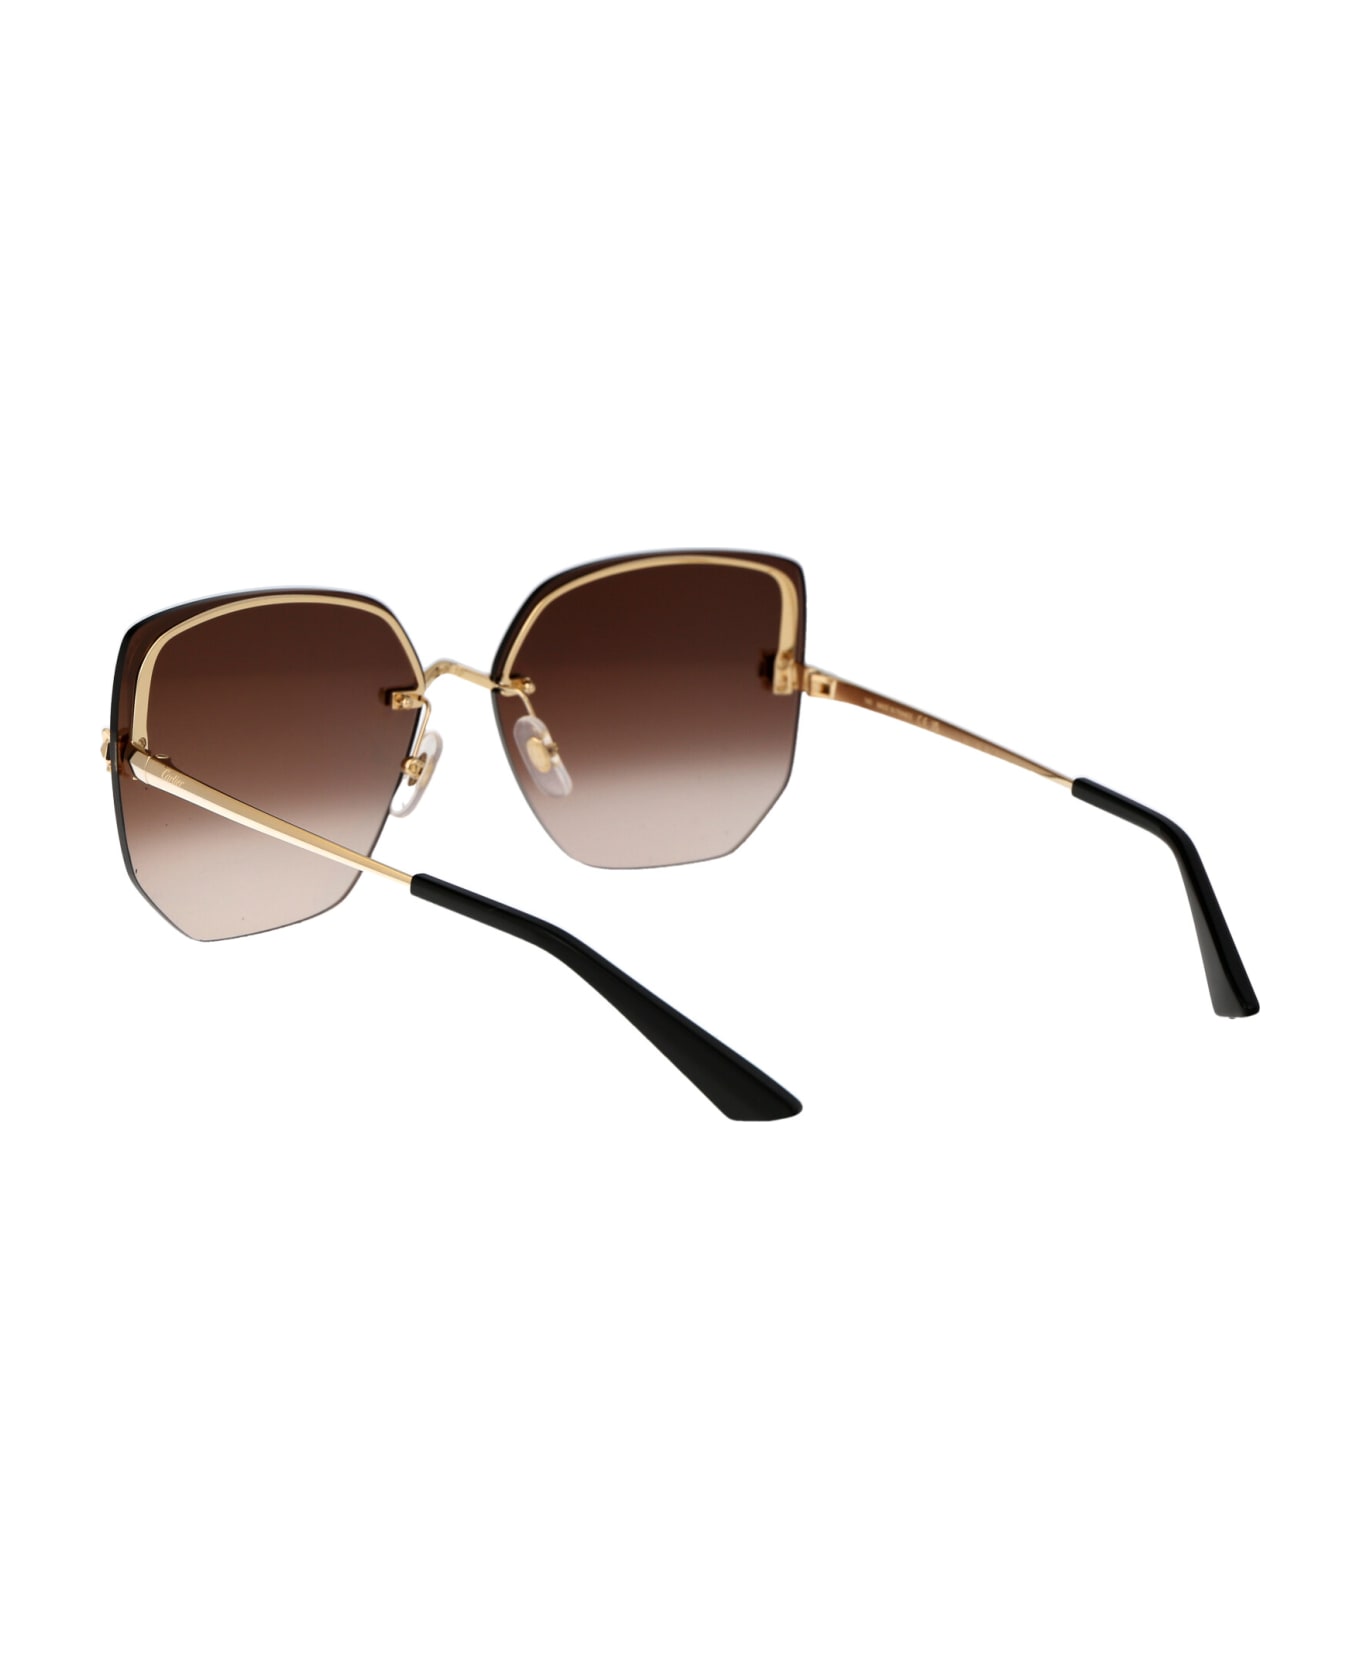 Cartier Eyewear Ct0432s Sunglasses - 002 GOLD GOLD BROWN サングラス